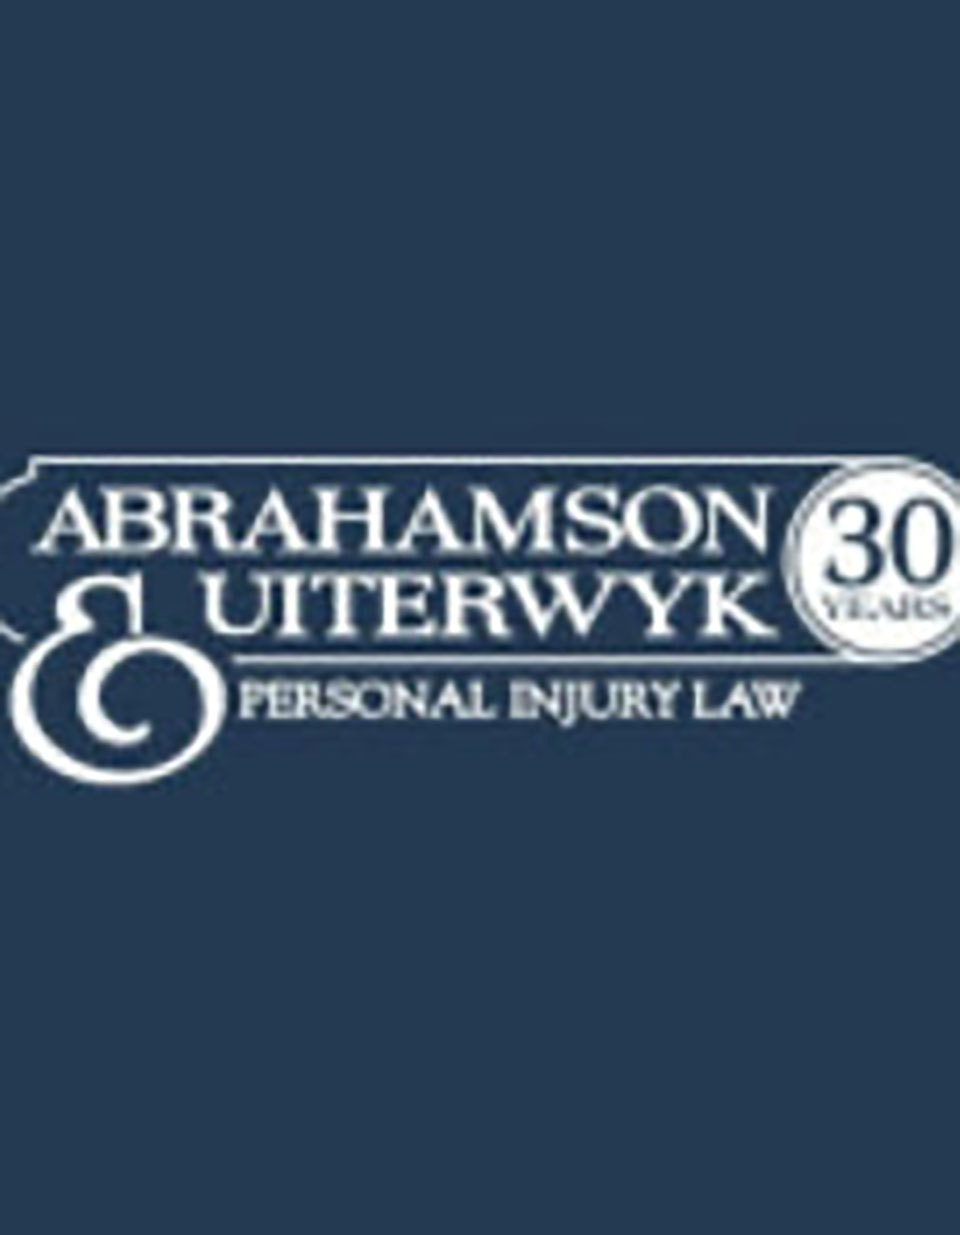 Abrahamson & Uiterwyk Car Accident Injury Lawyers